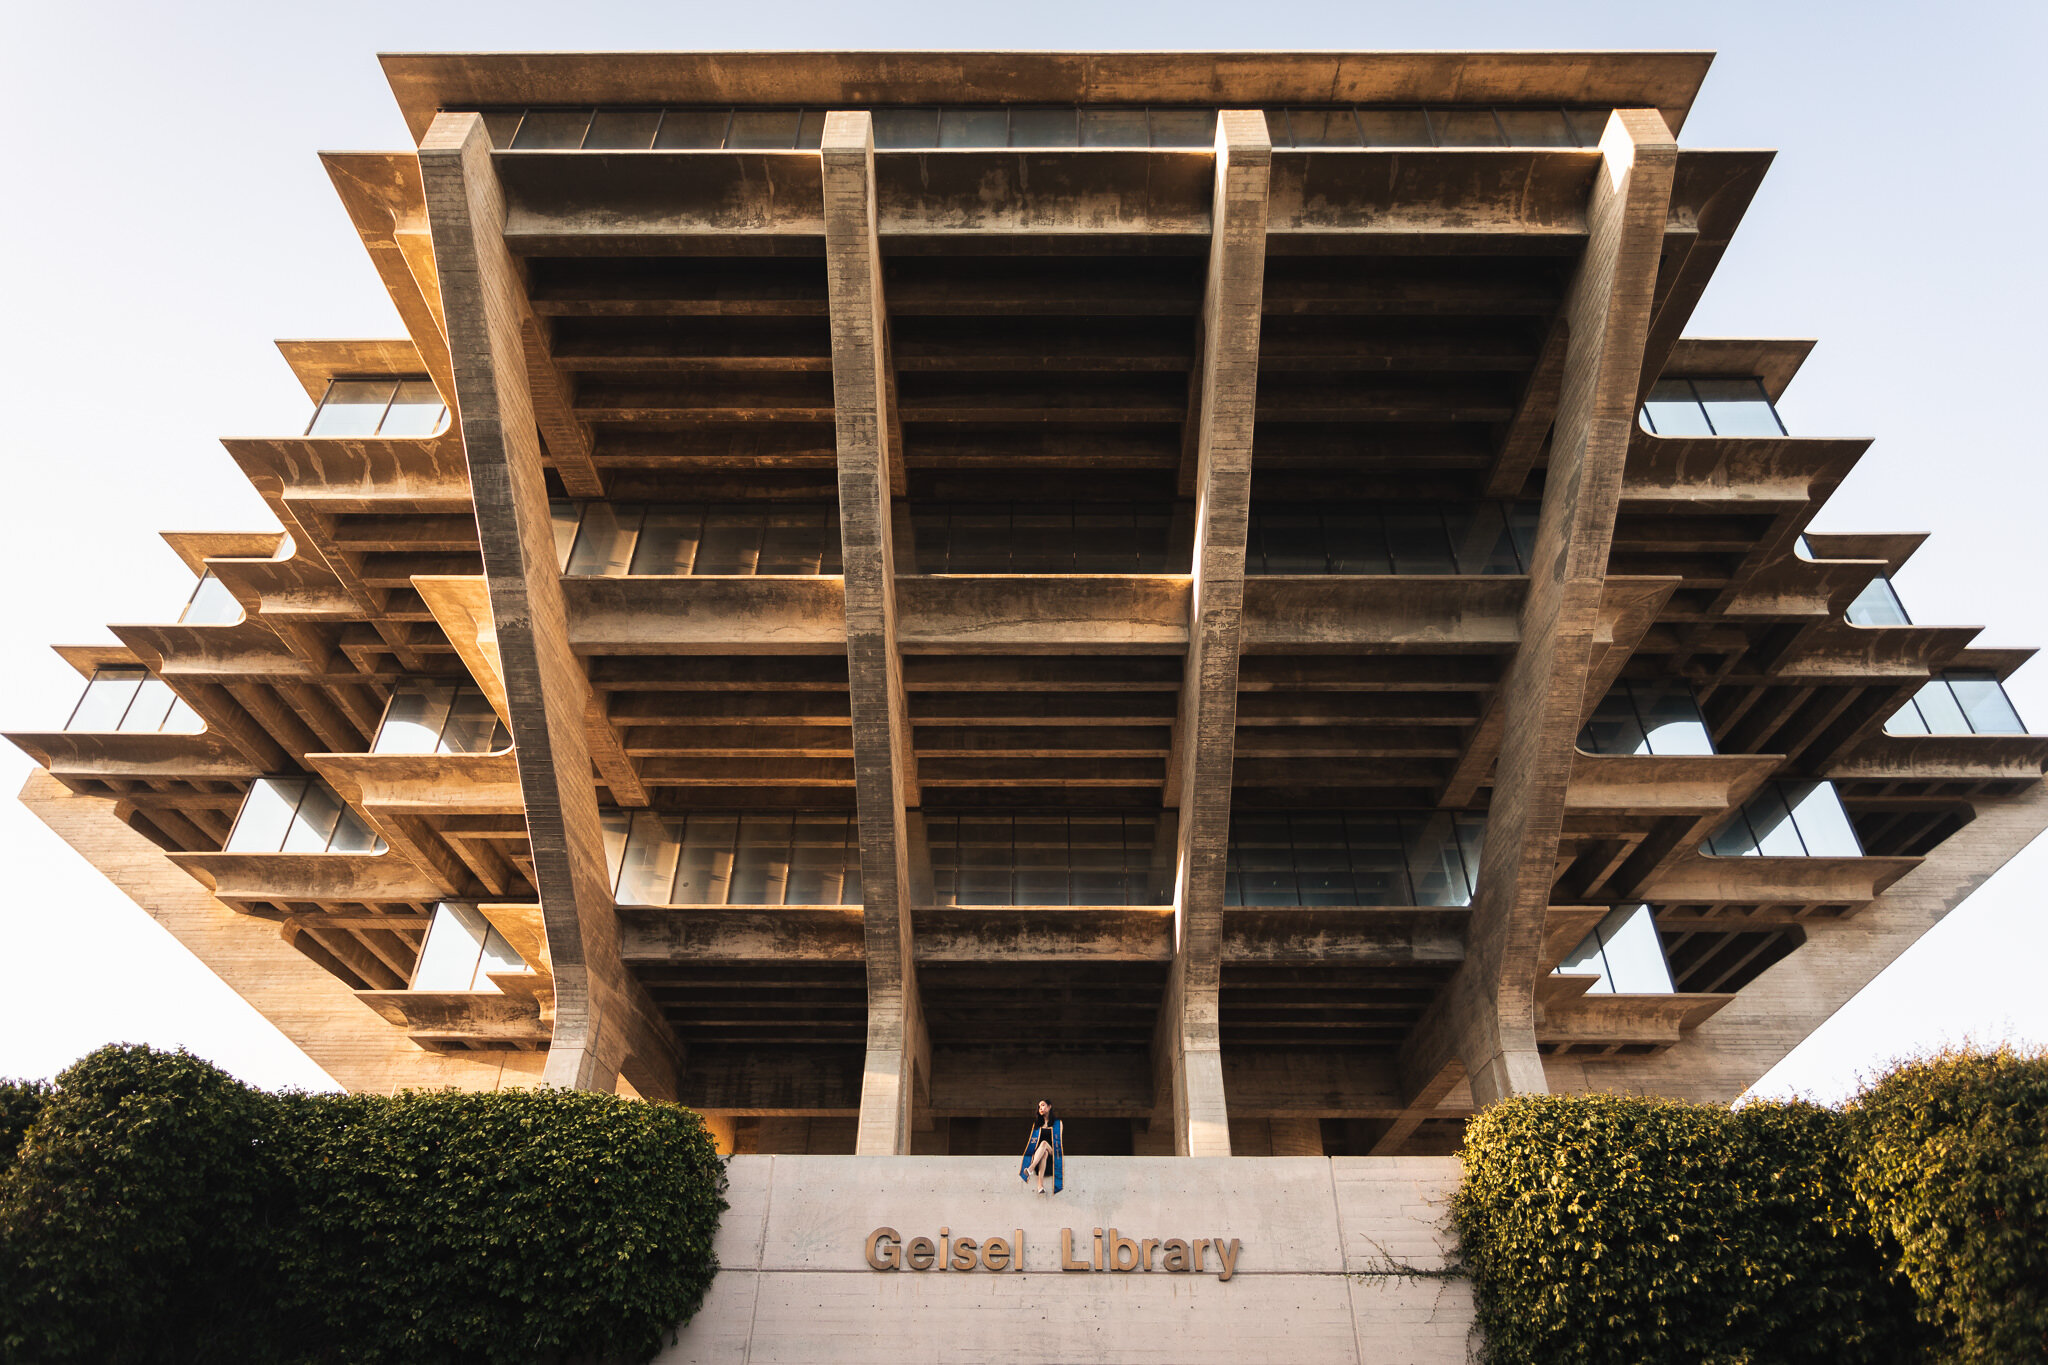 UCSD graduation portrait wide photo of Geisel Library